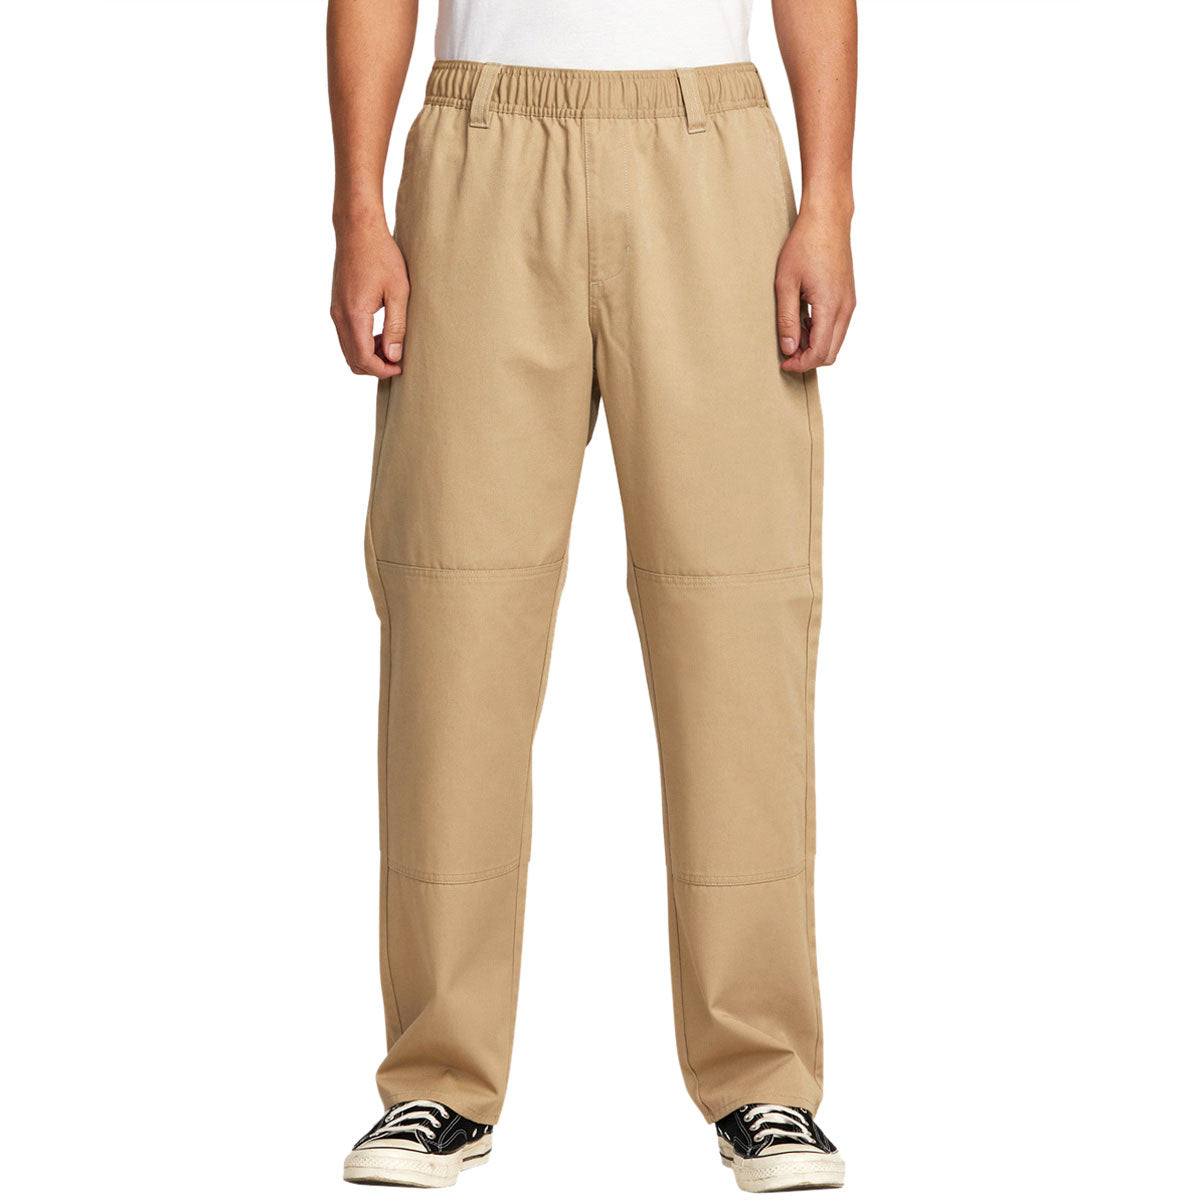 RVCA Americana Elastic Pants - Khaki image 1